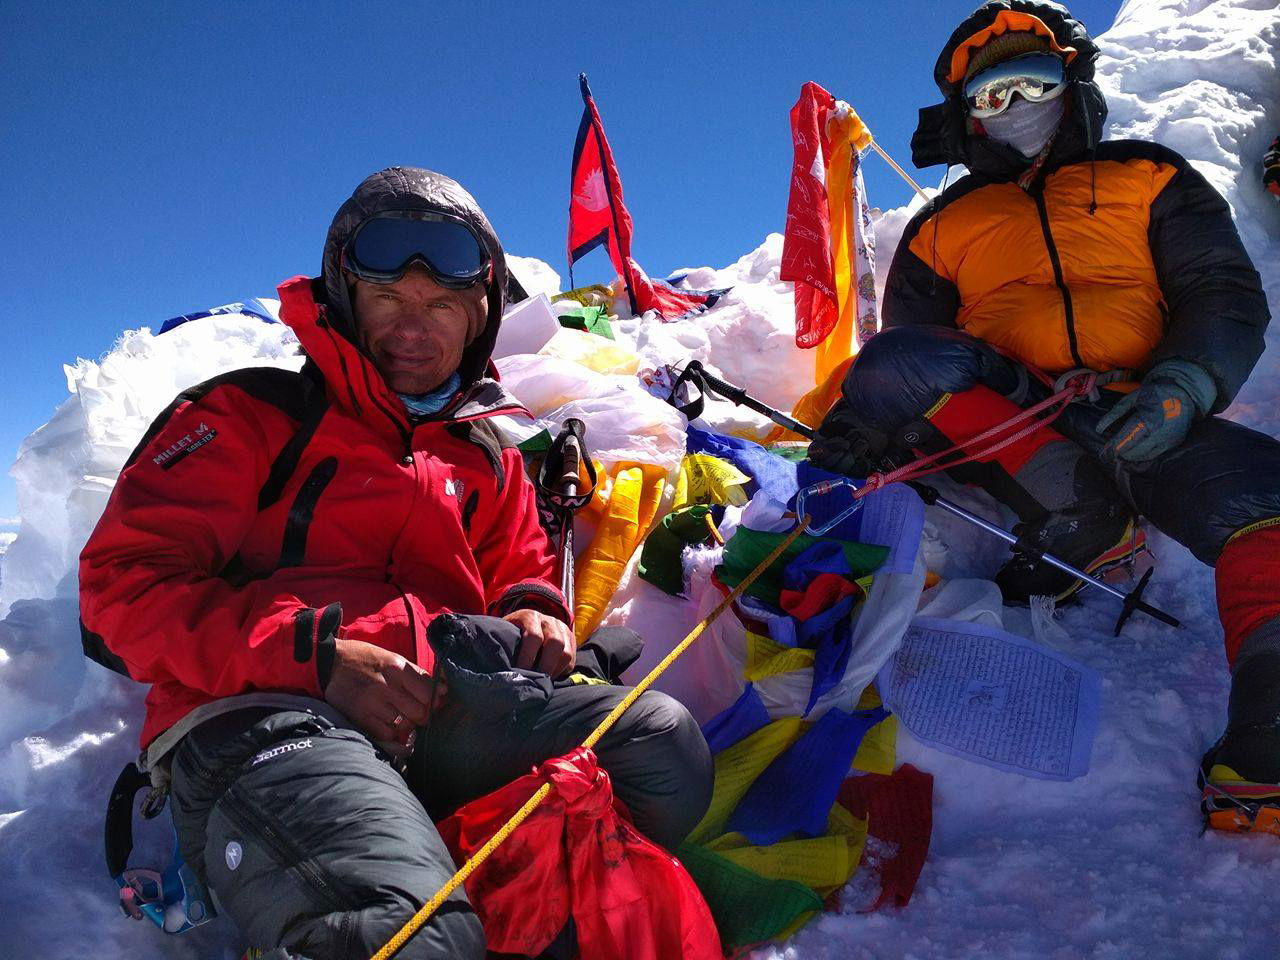 Manaslu climbing expedition 8163- 2017